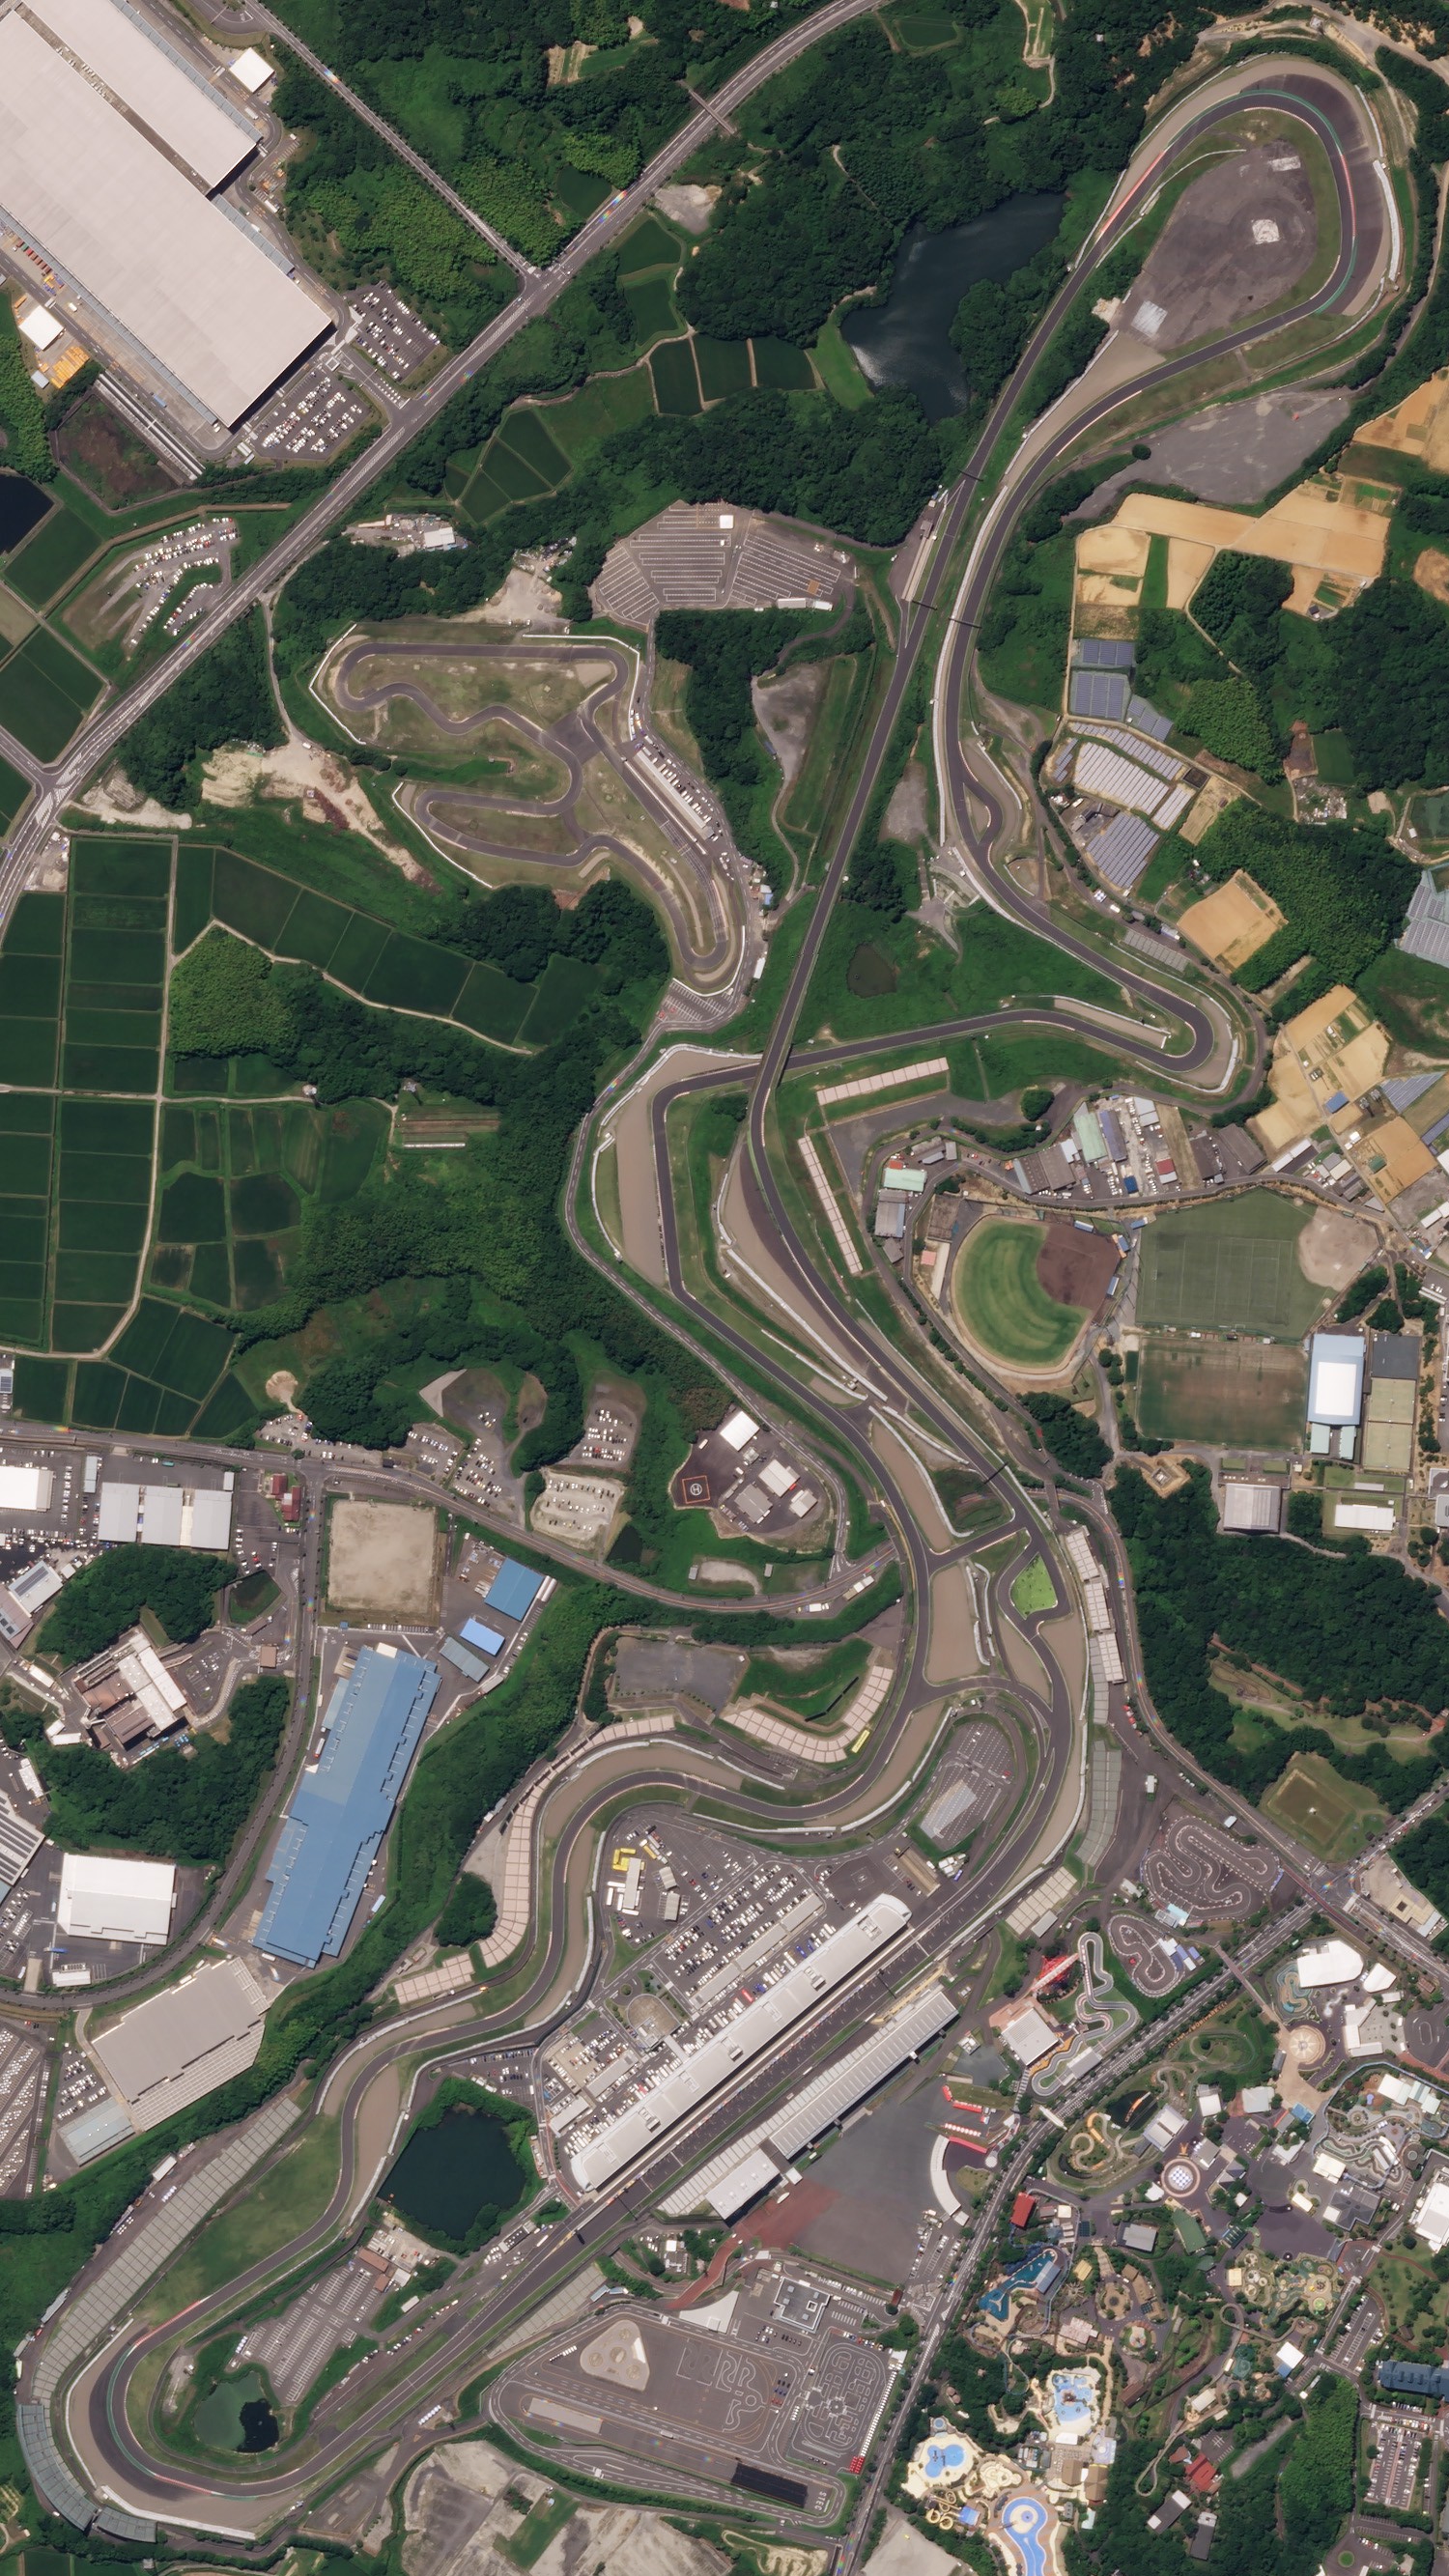 Suzuka International Racing Course